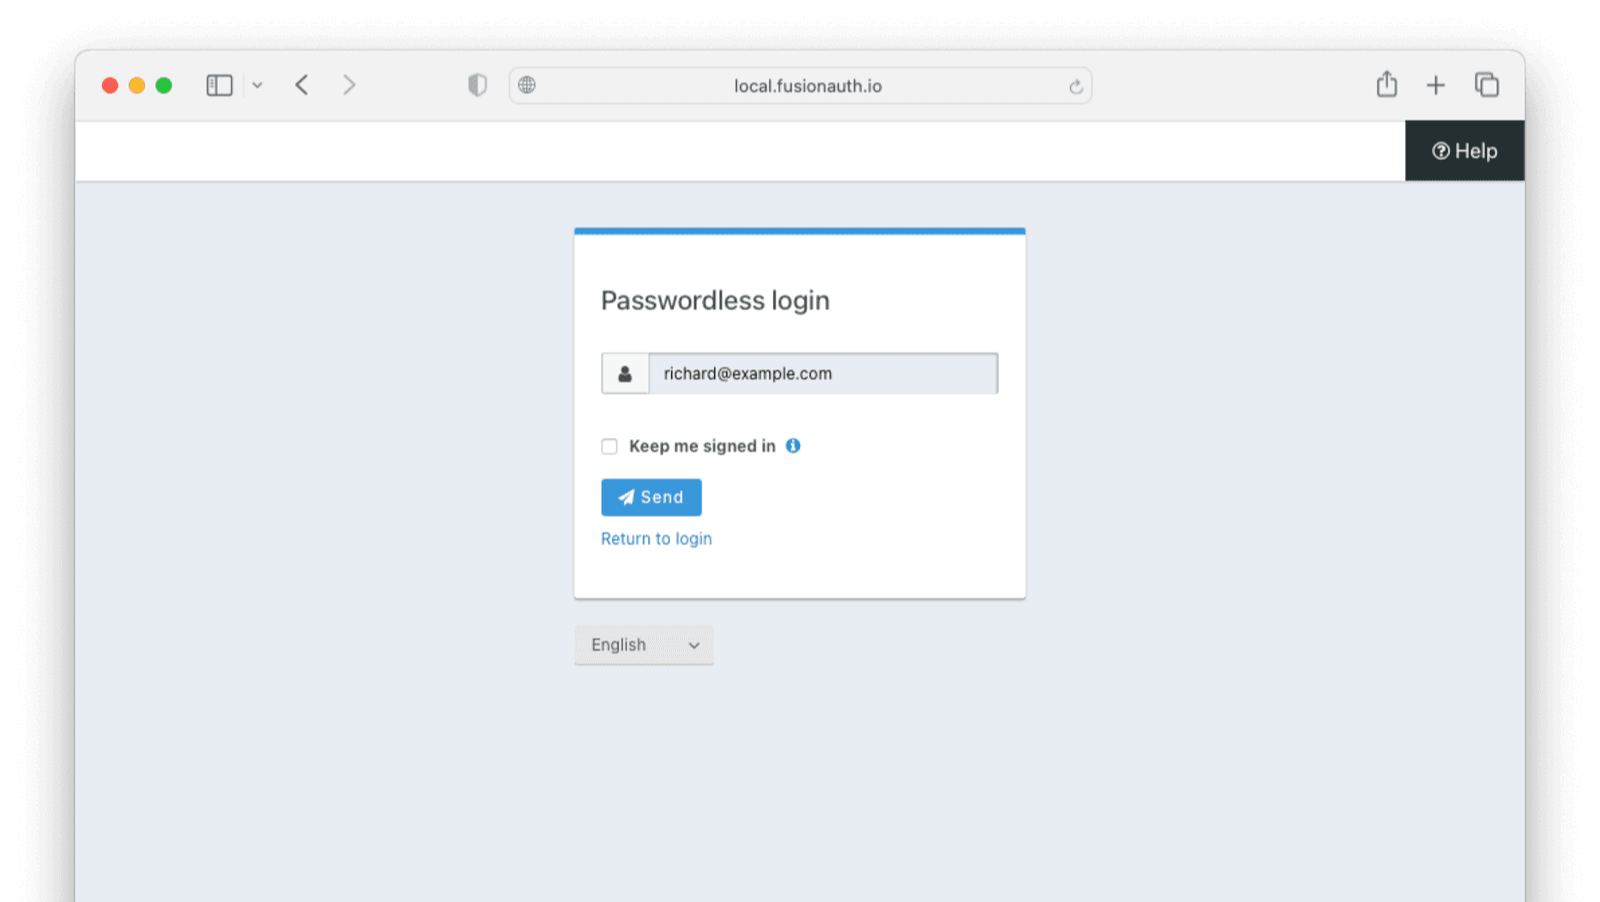 The FusionAuth passwordless login form